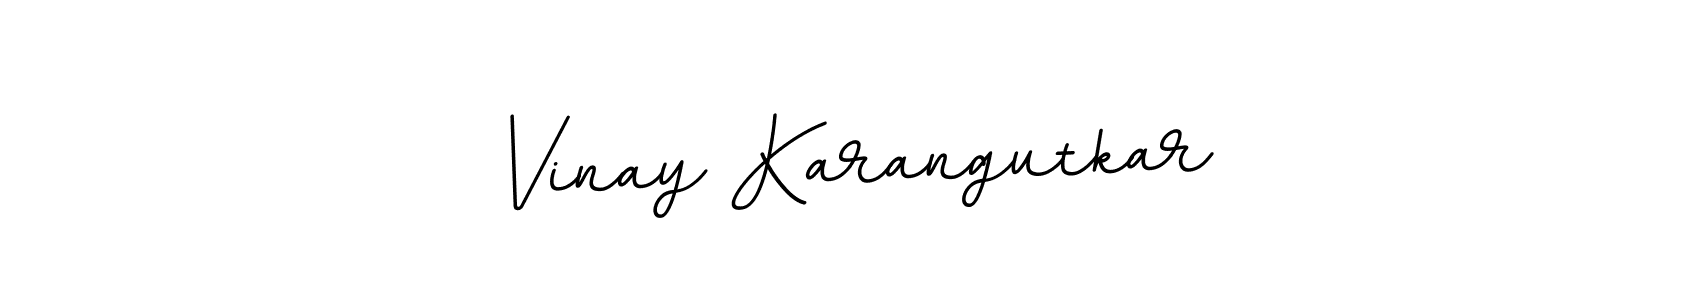 Make a beautiful signature design for name Vinay Karangutkar. Use this online signature maker to create a handwritten signature for free. Vinay Karangutkar signature style 11 images and pictures png